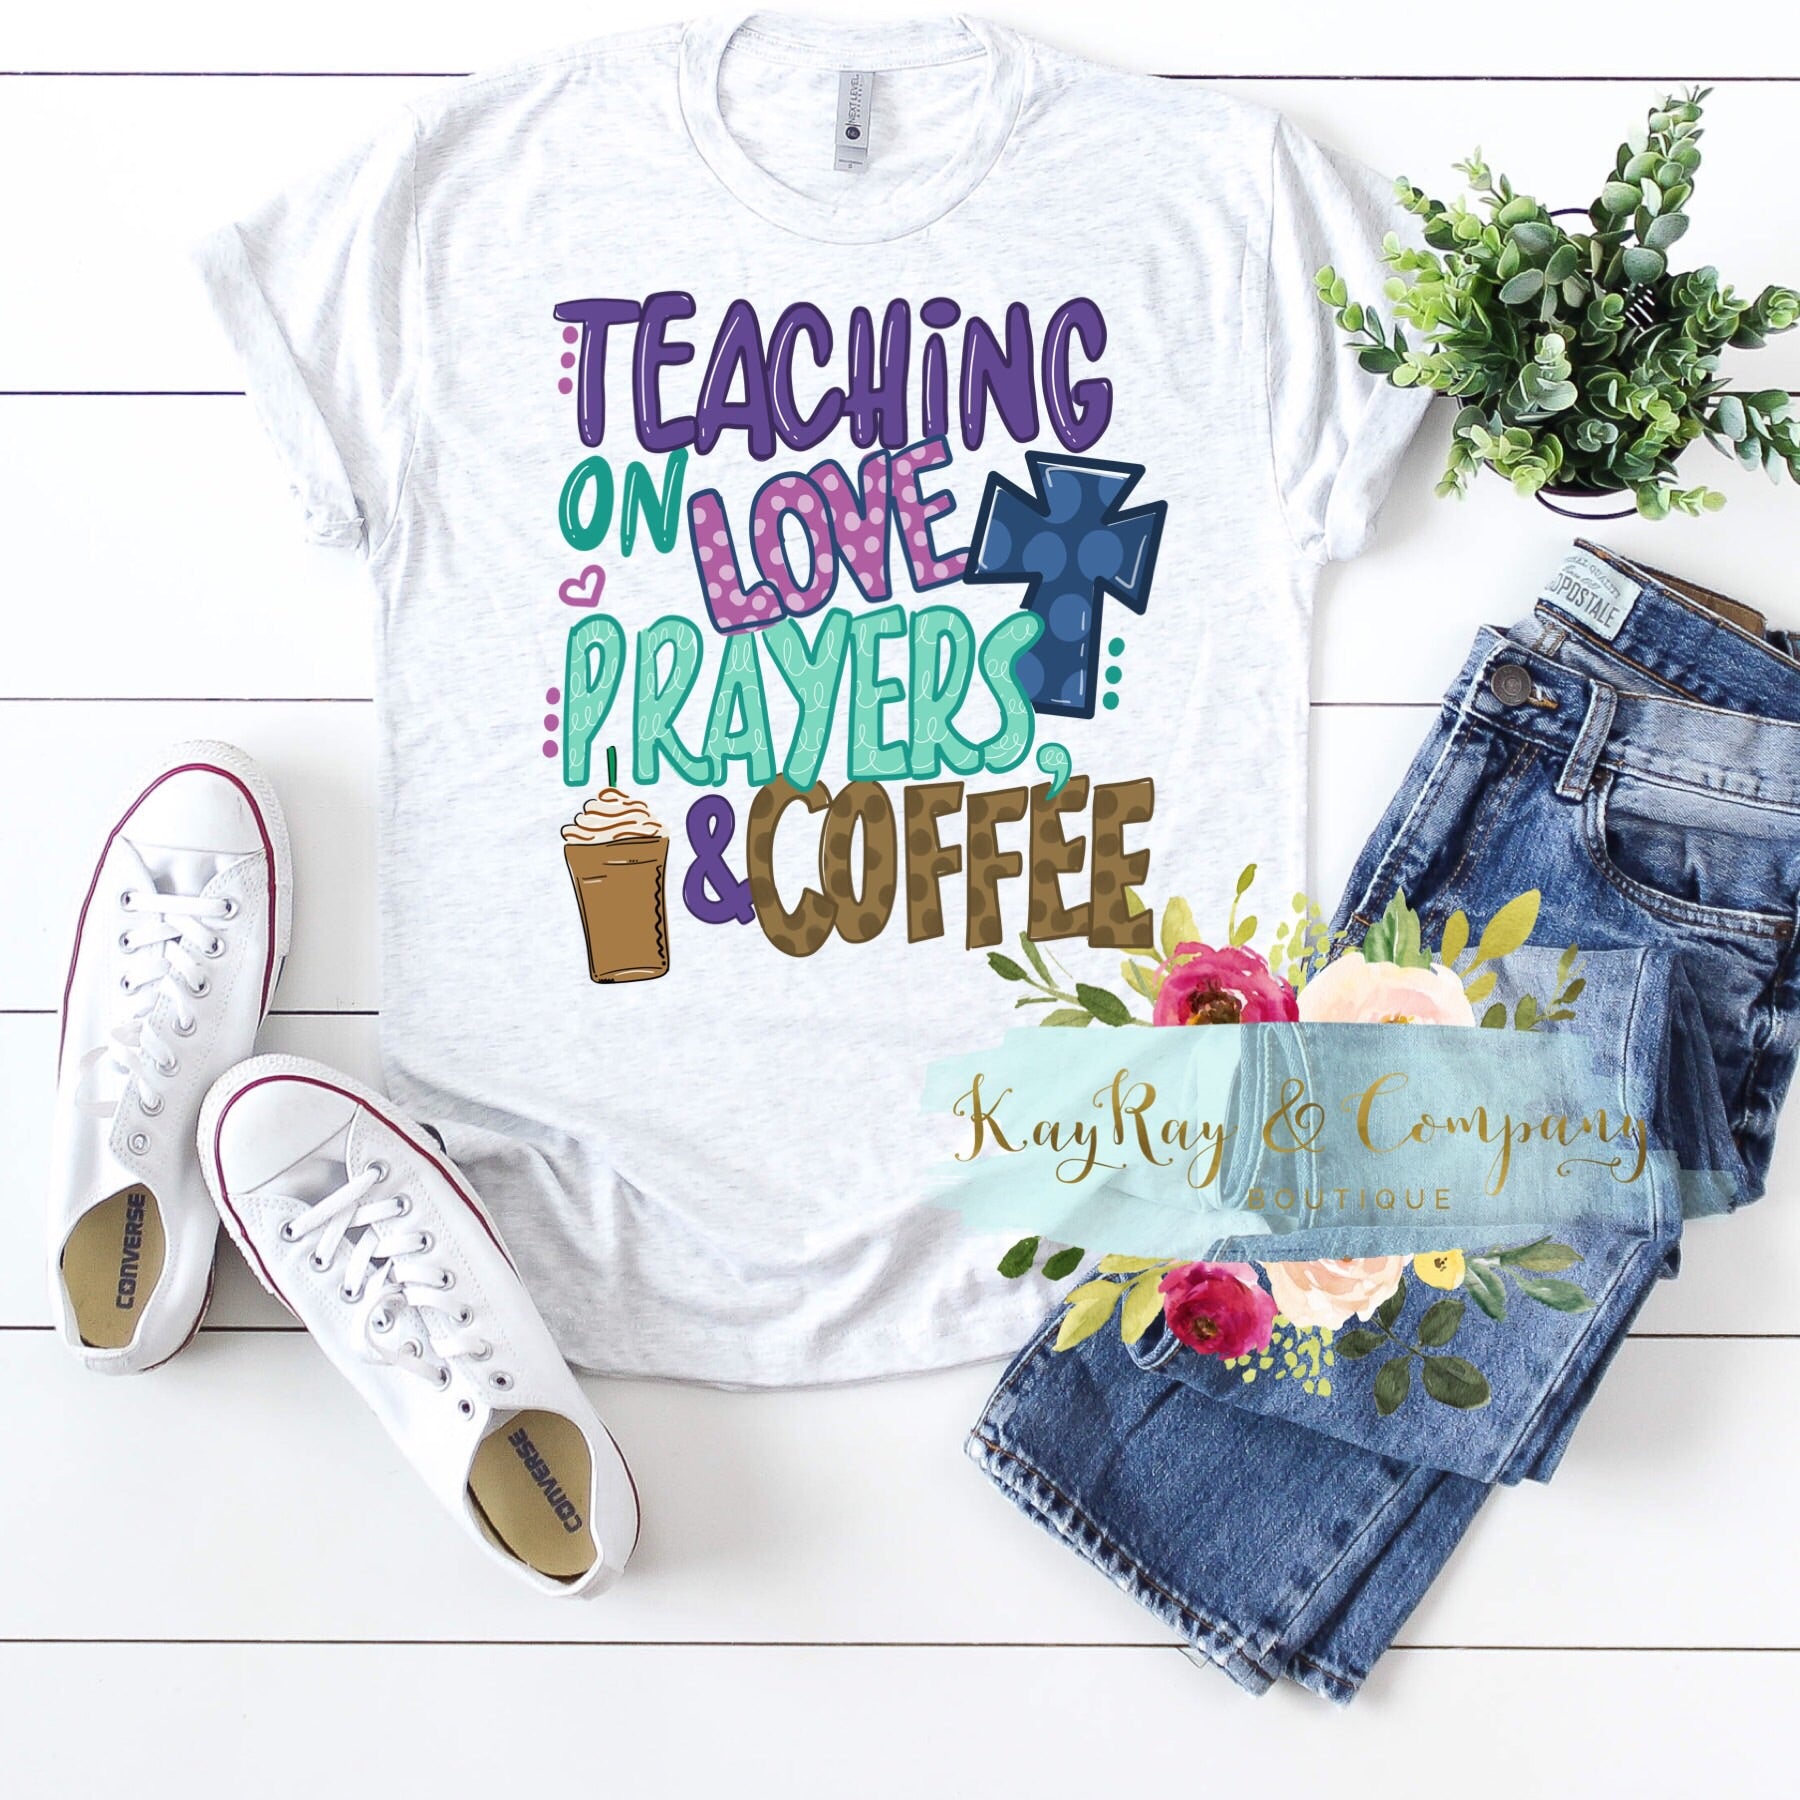 Teaching on love, prayers & coffee T-shirt